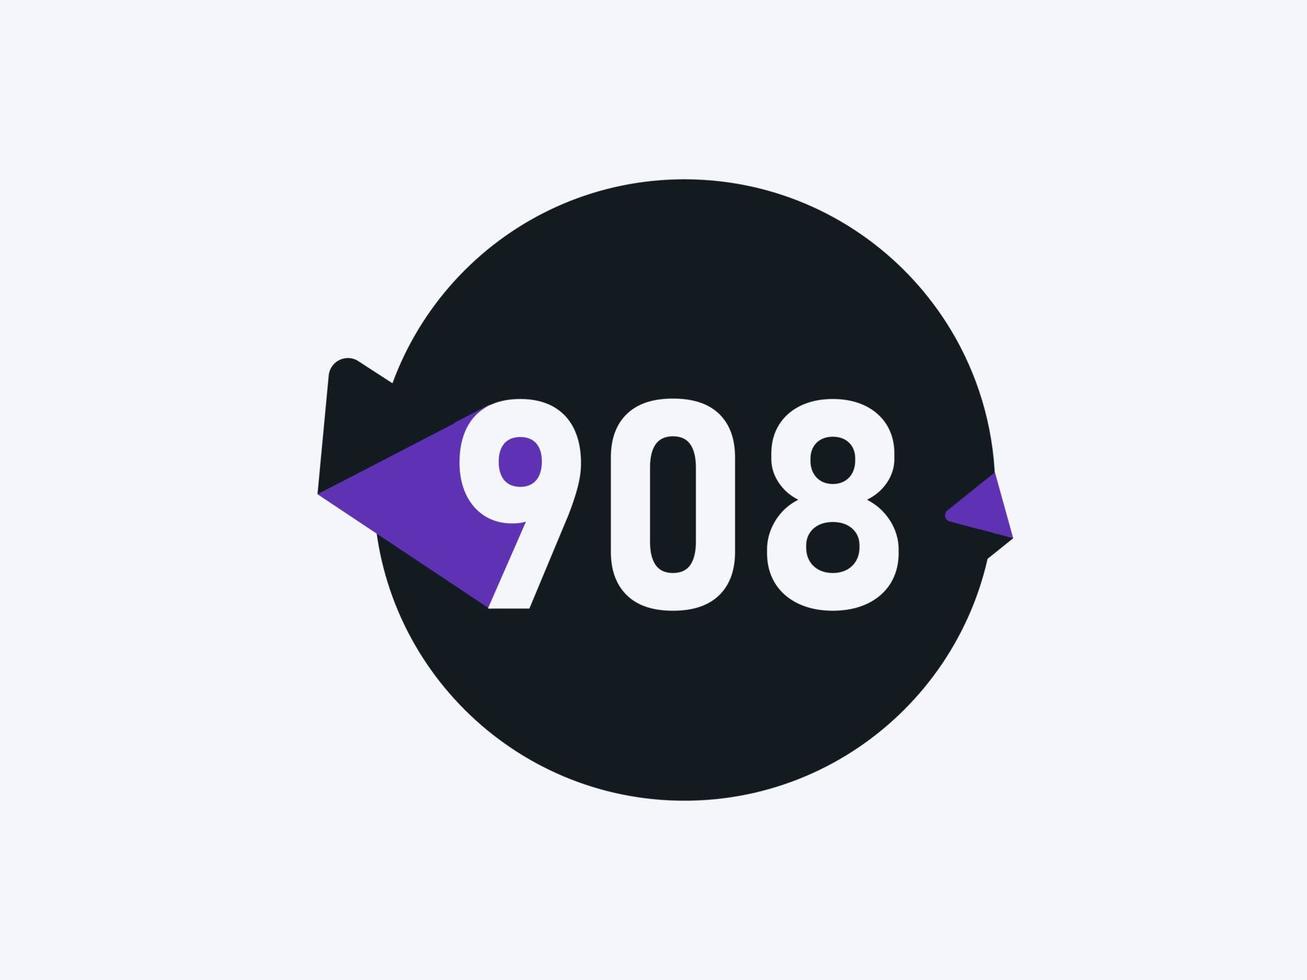 908 Number logo icon design vector image. Number logo icon design vector image